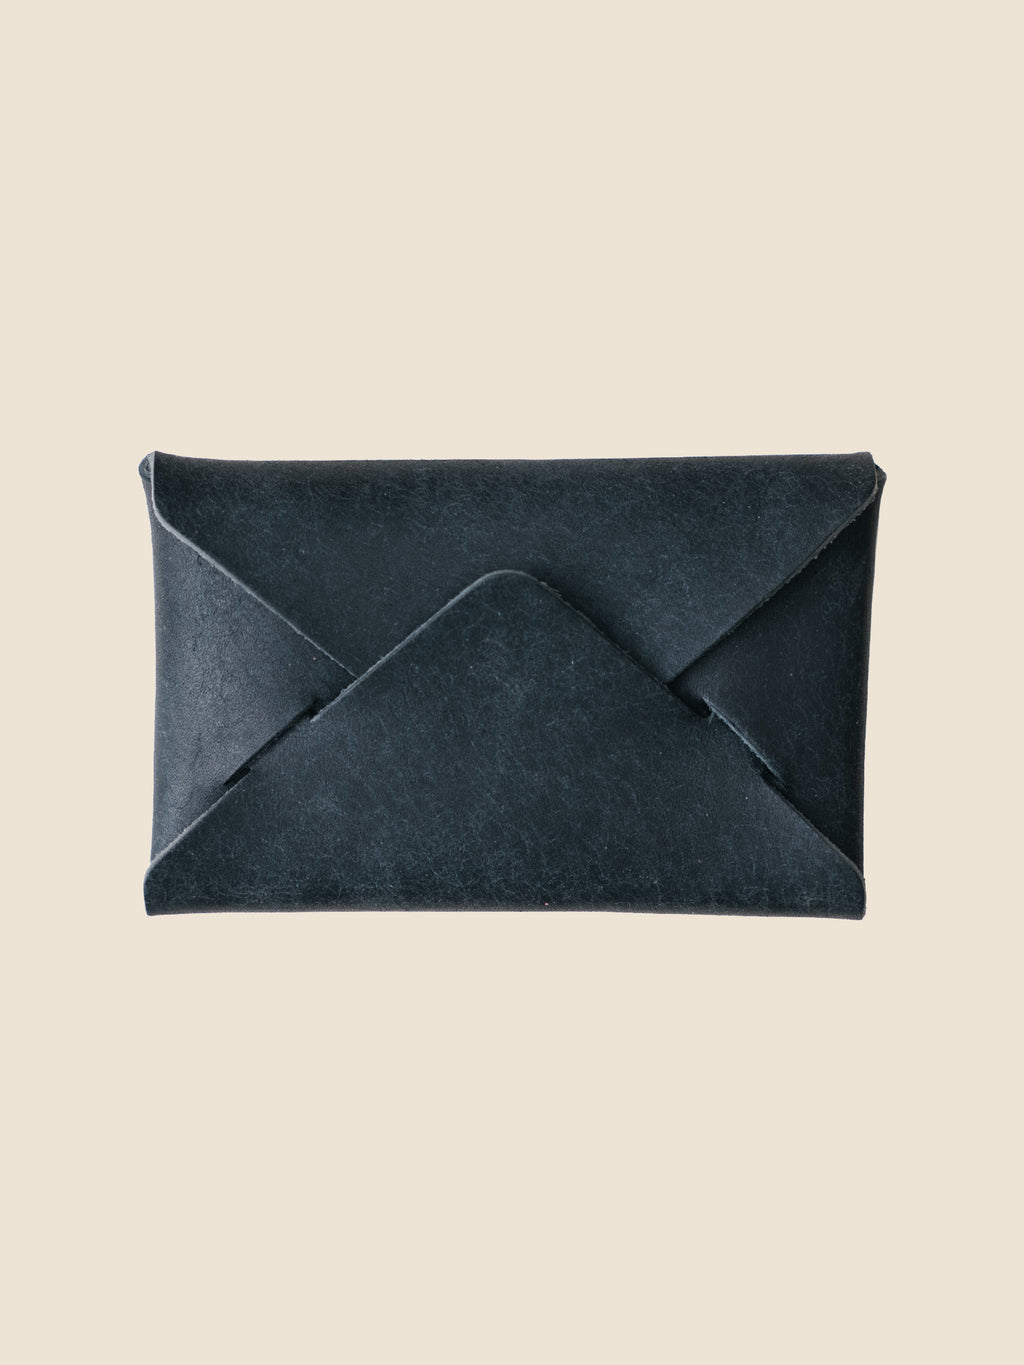  Smoll Envelope, Compact Wallet, Italian Veg-Tanned